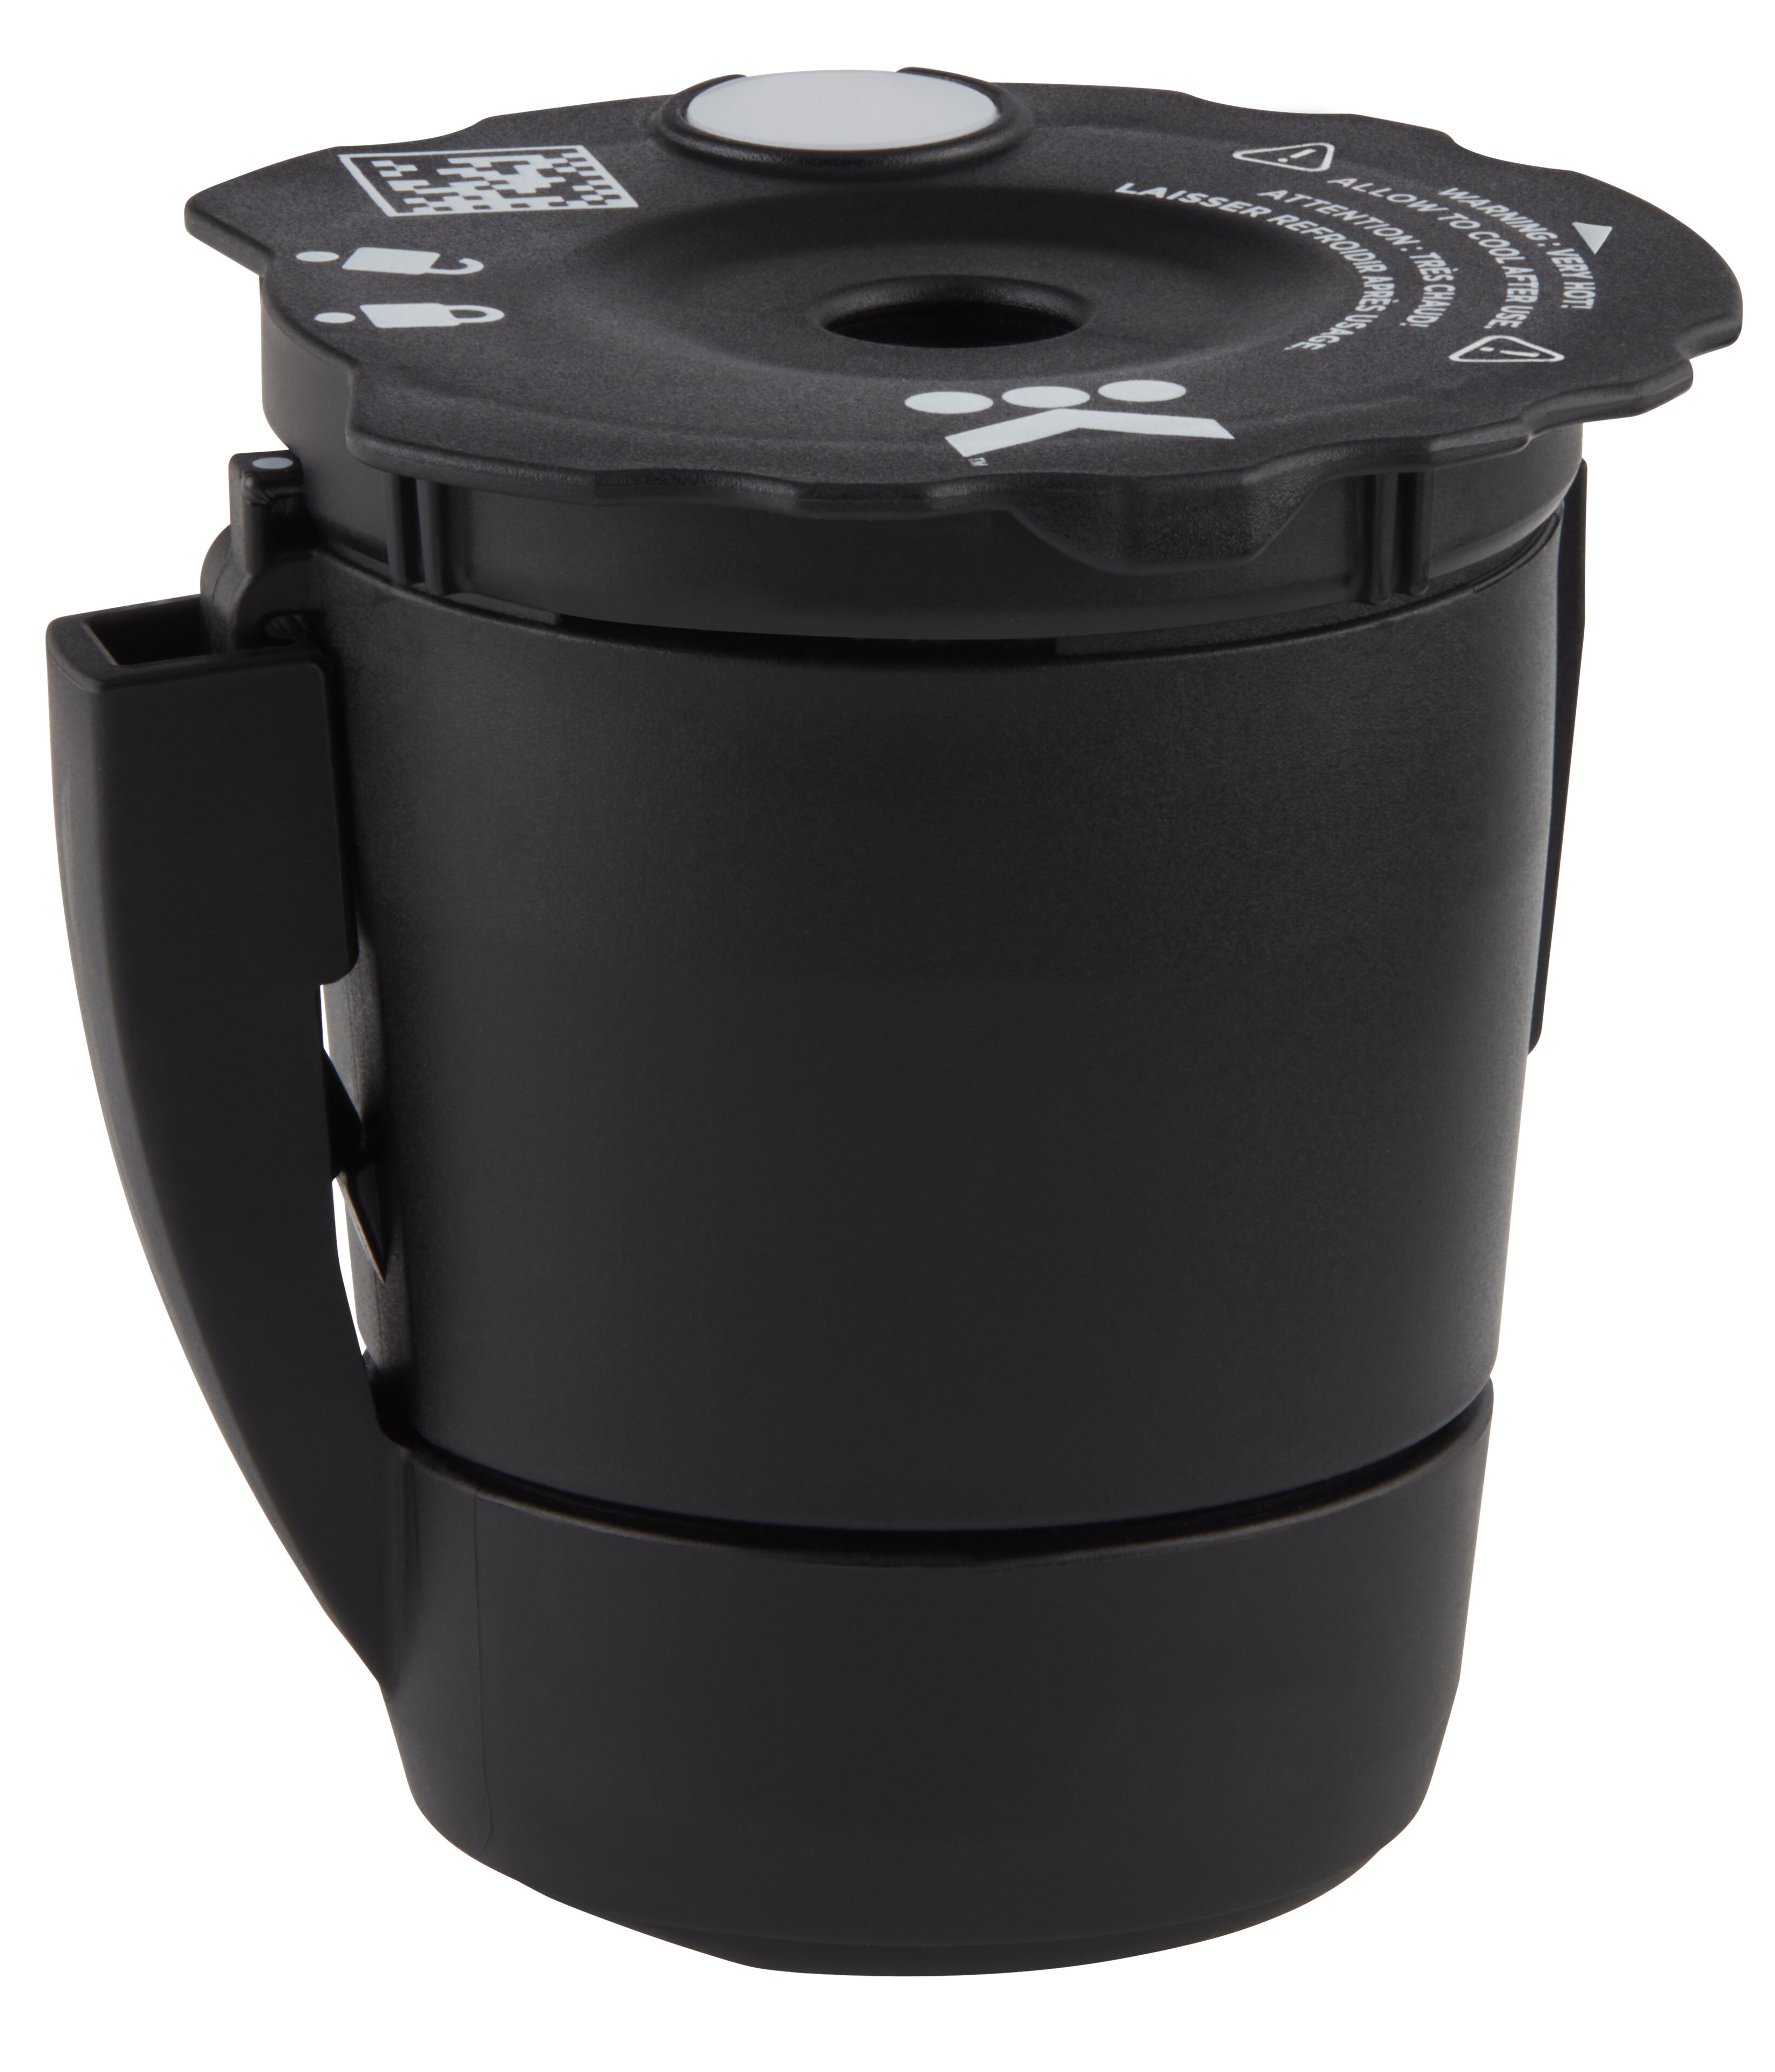 Keurig K-Elite Coffee Maker w/ My K-Cup, Filter, and 40 K-Cup Pods